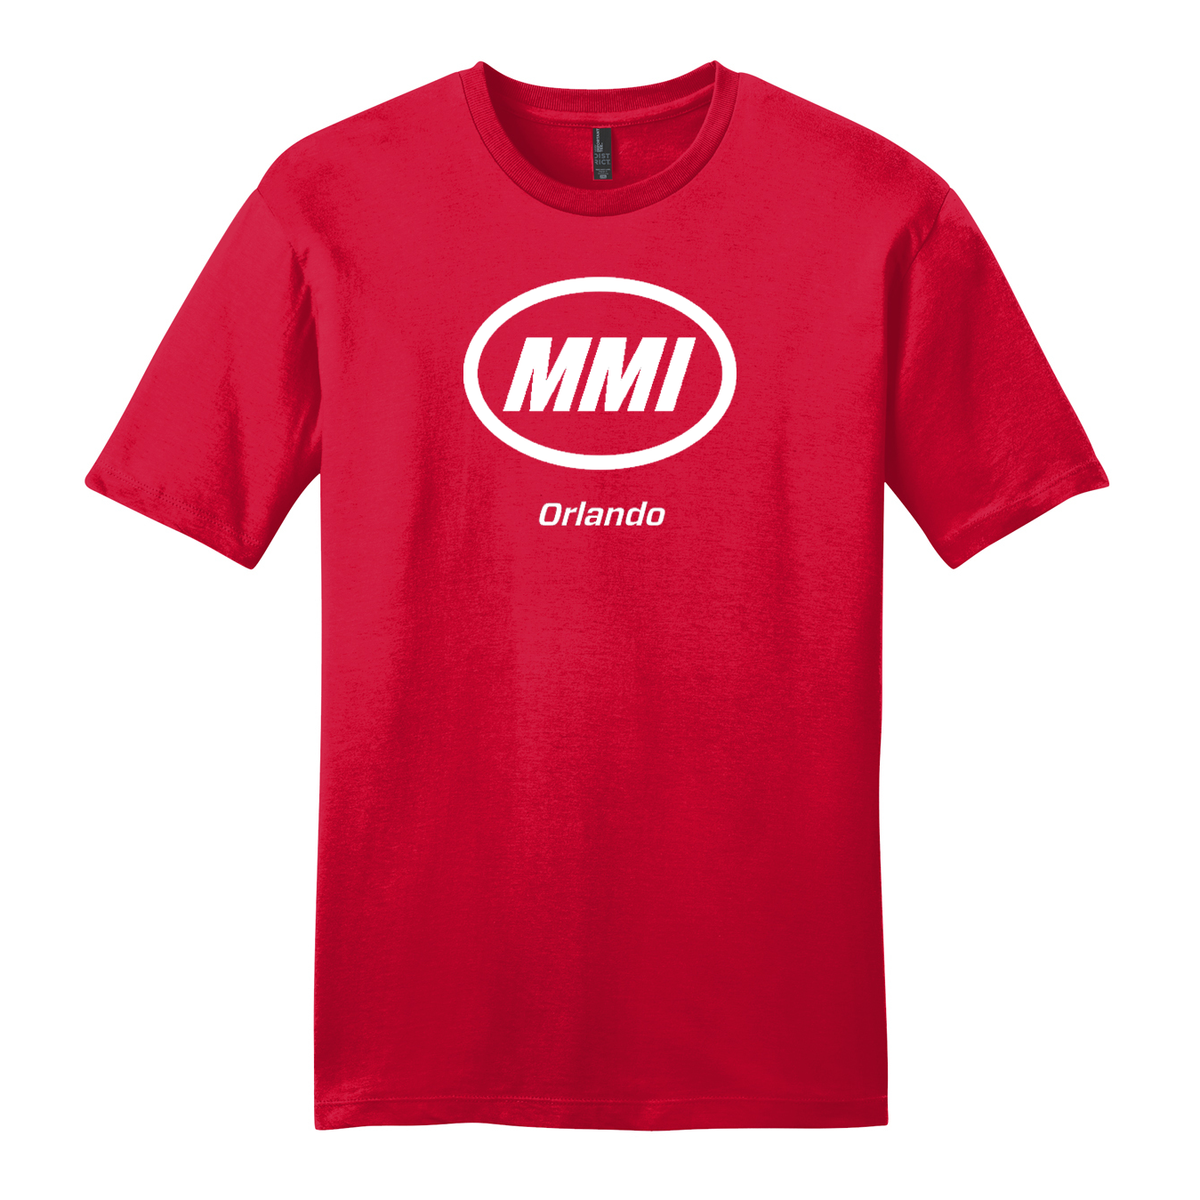 MMI (Moto) Orlando Campus T-Shirt